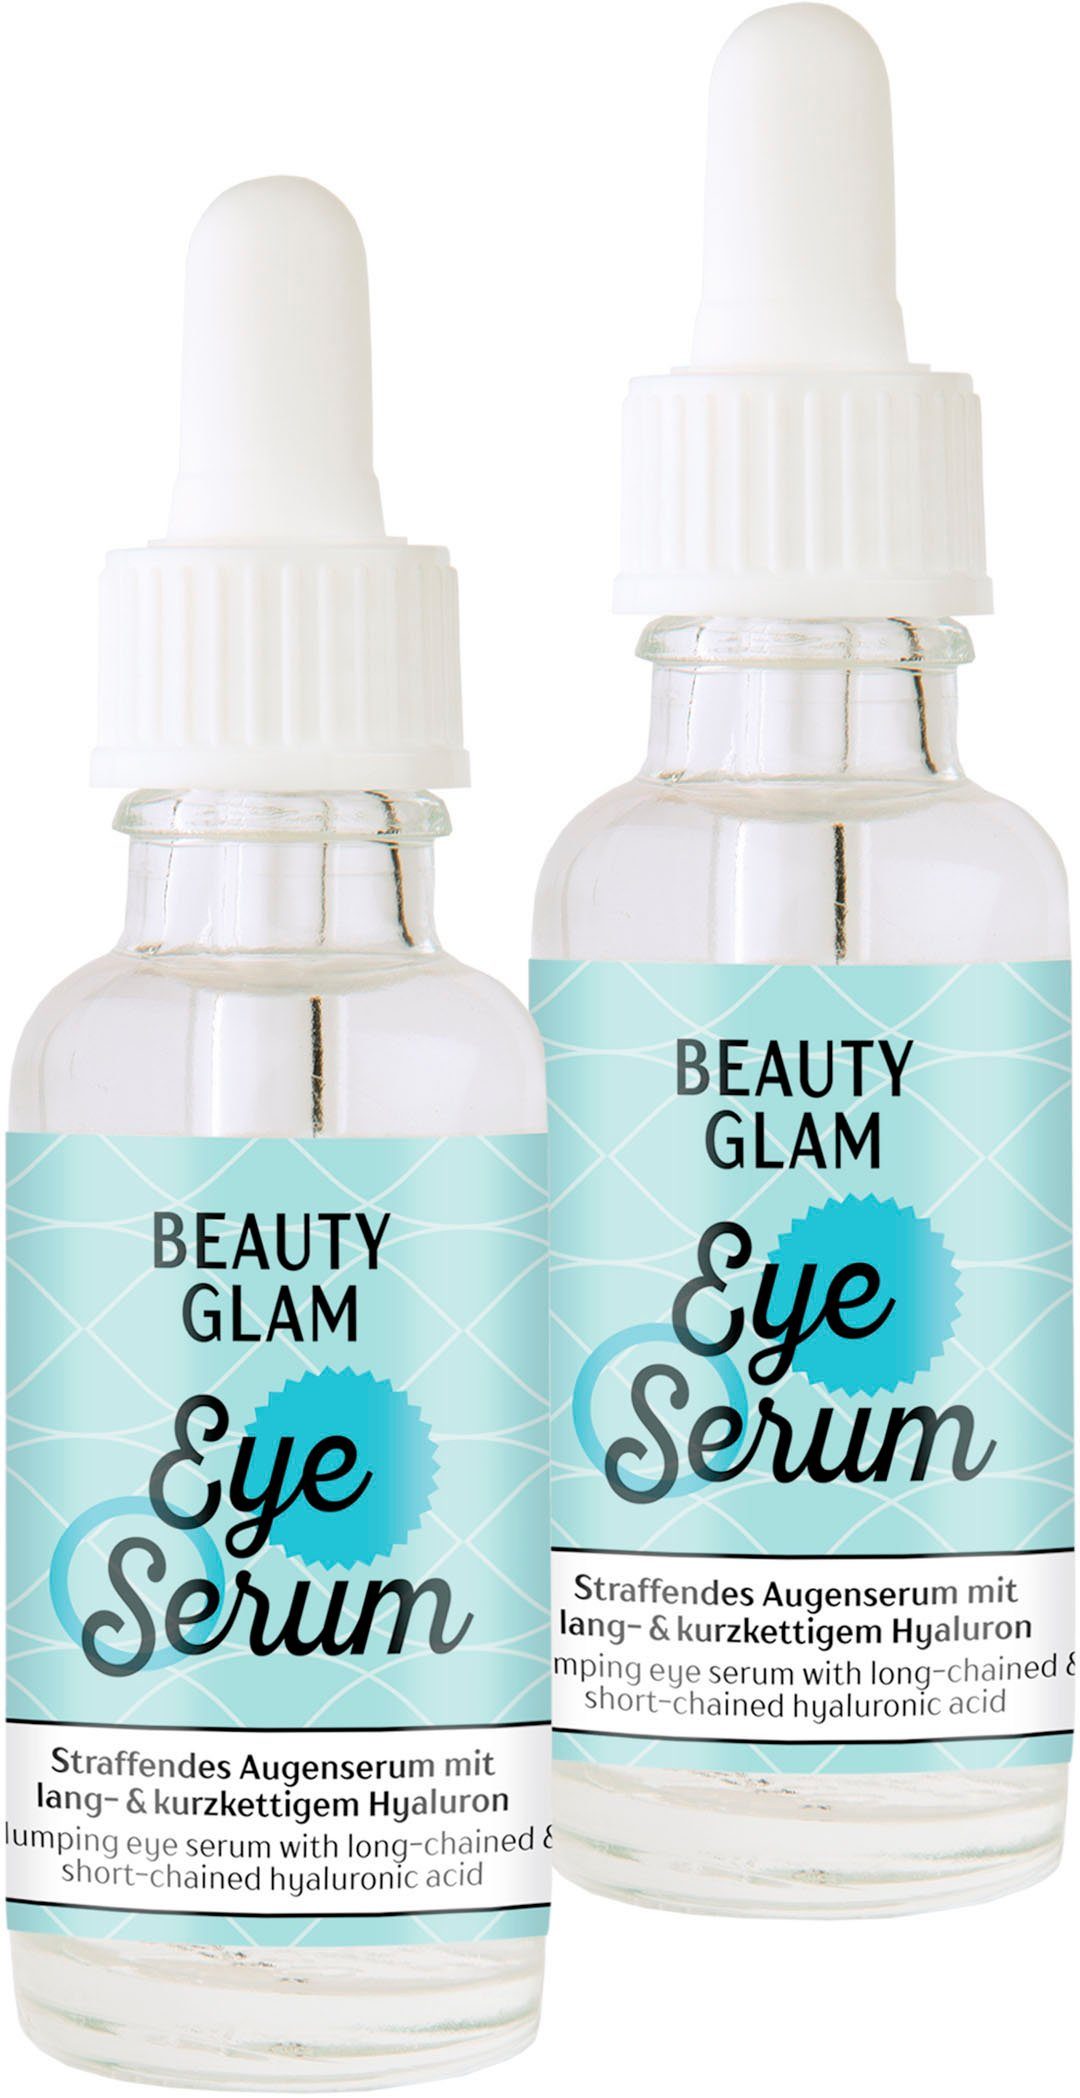 BEAUTY GLAM Augenserum Eye Serum, 2